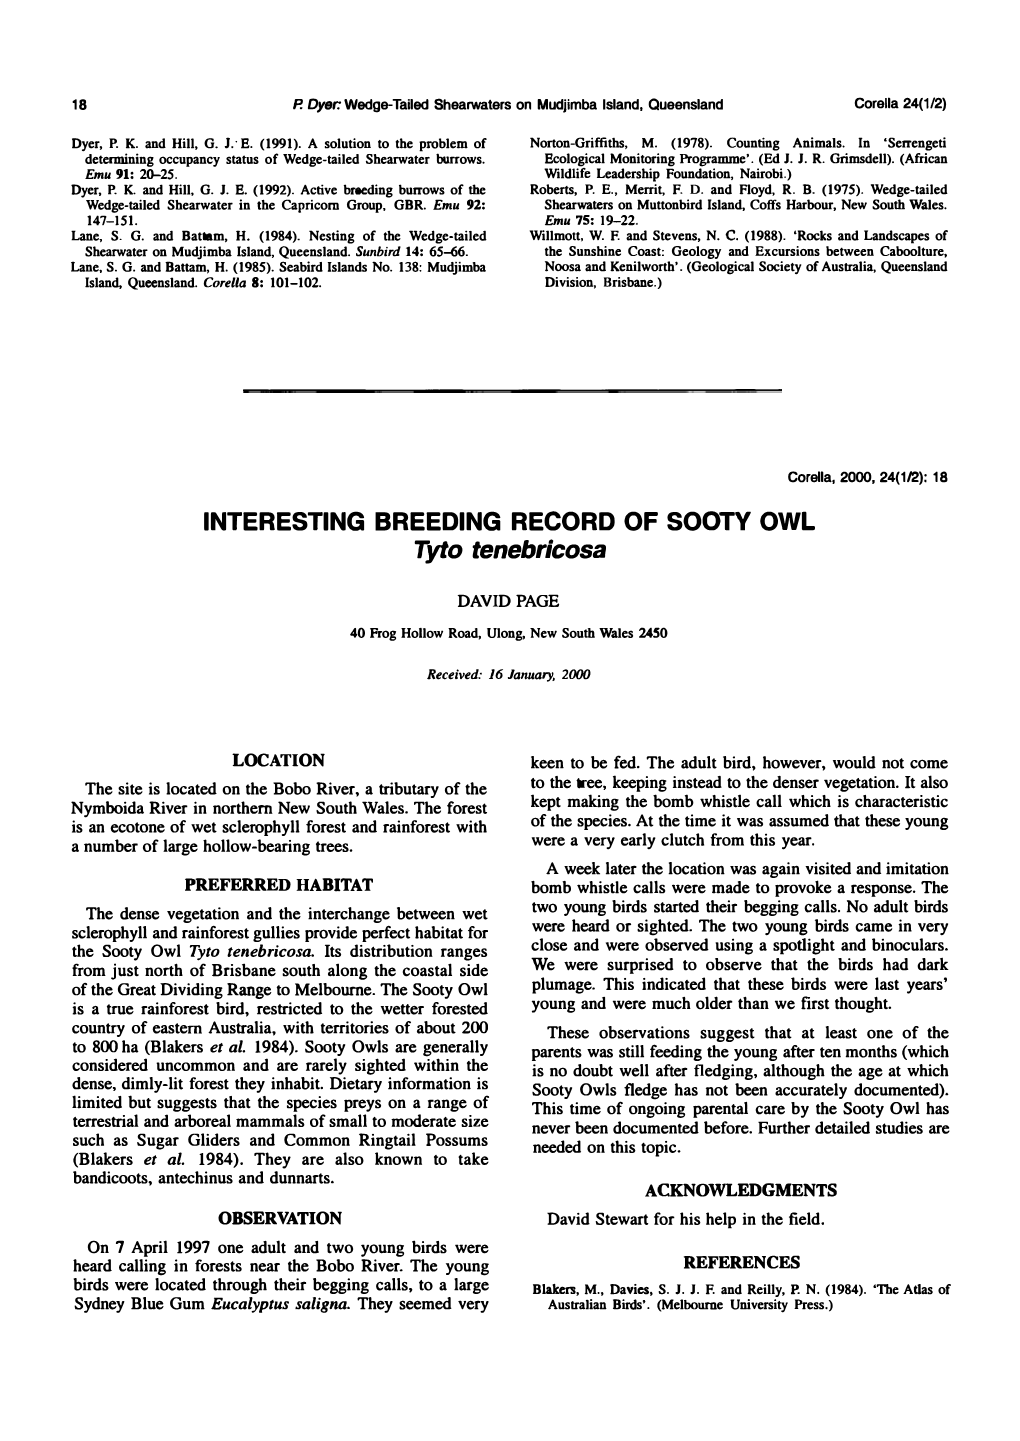 Interesting Breeding Record of Sooty Owl Tyto Tenebricosa. Corella 24